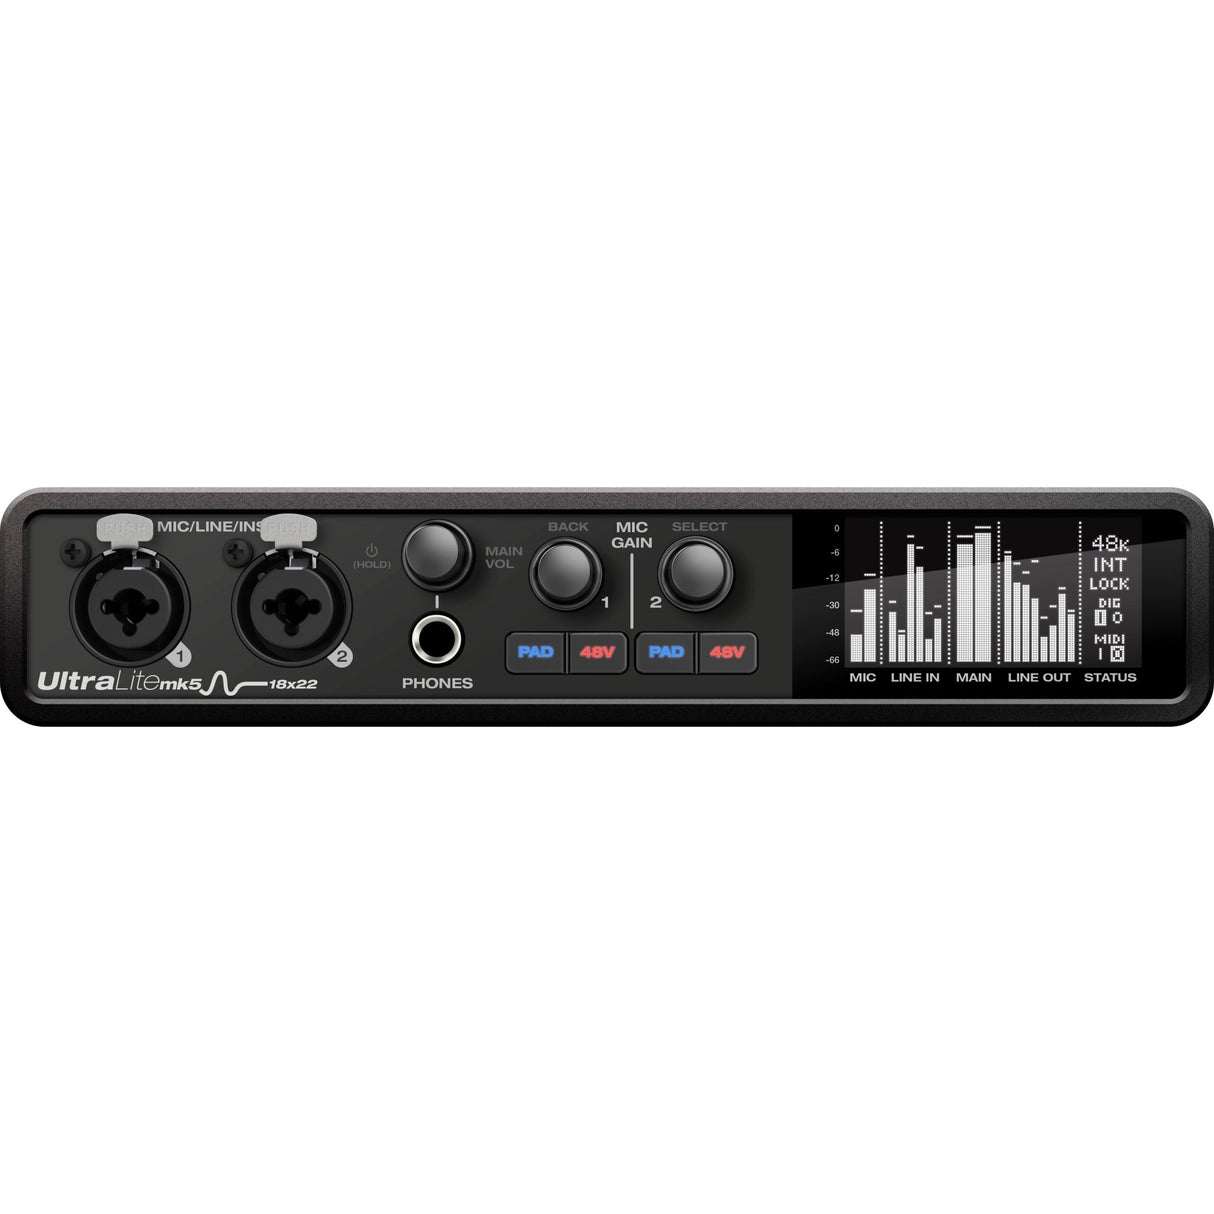 MOTU UltraLitemk5 18 x 22 USB Audio Interface